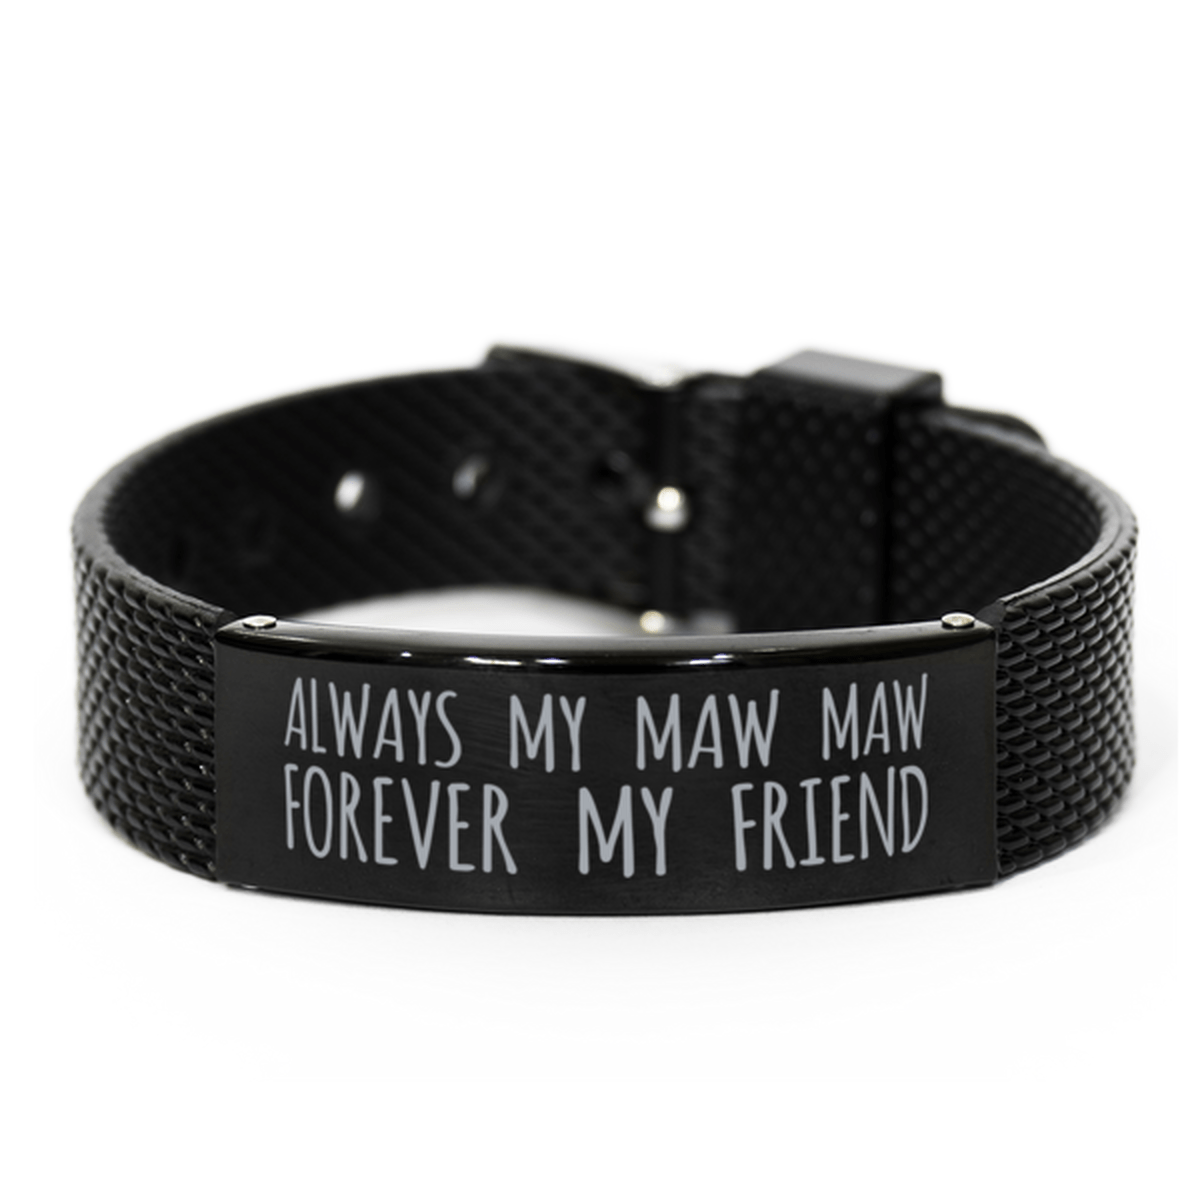 Inspirational Maw Maw Black Shark Mesh Bracelet, Always My Maw Maw Forever My Friend, Best Birthday Gifts for Family Friends